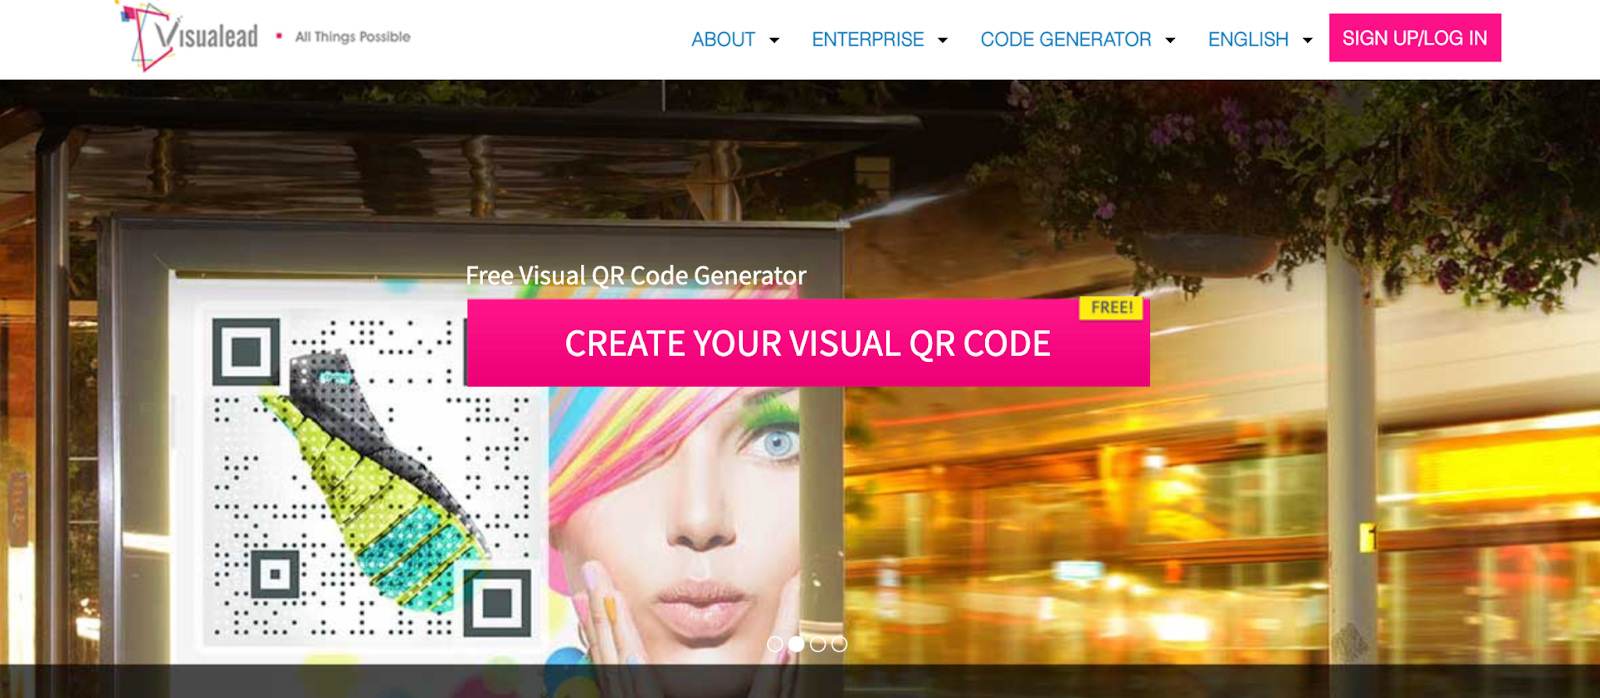  Best QR Code Generator: Visualead